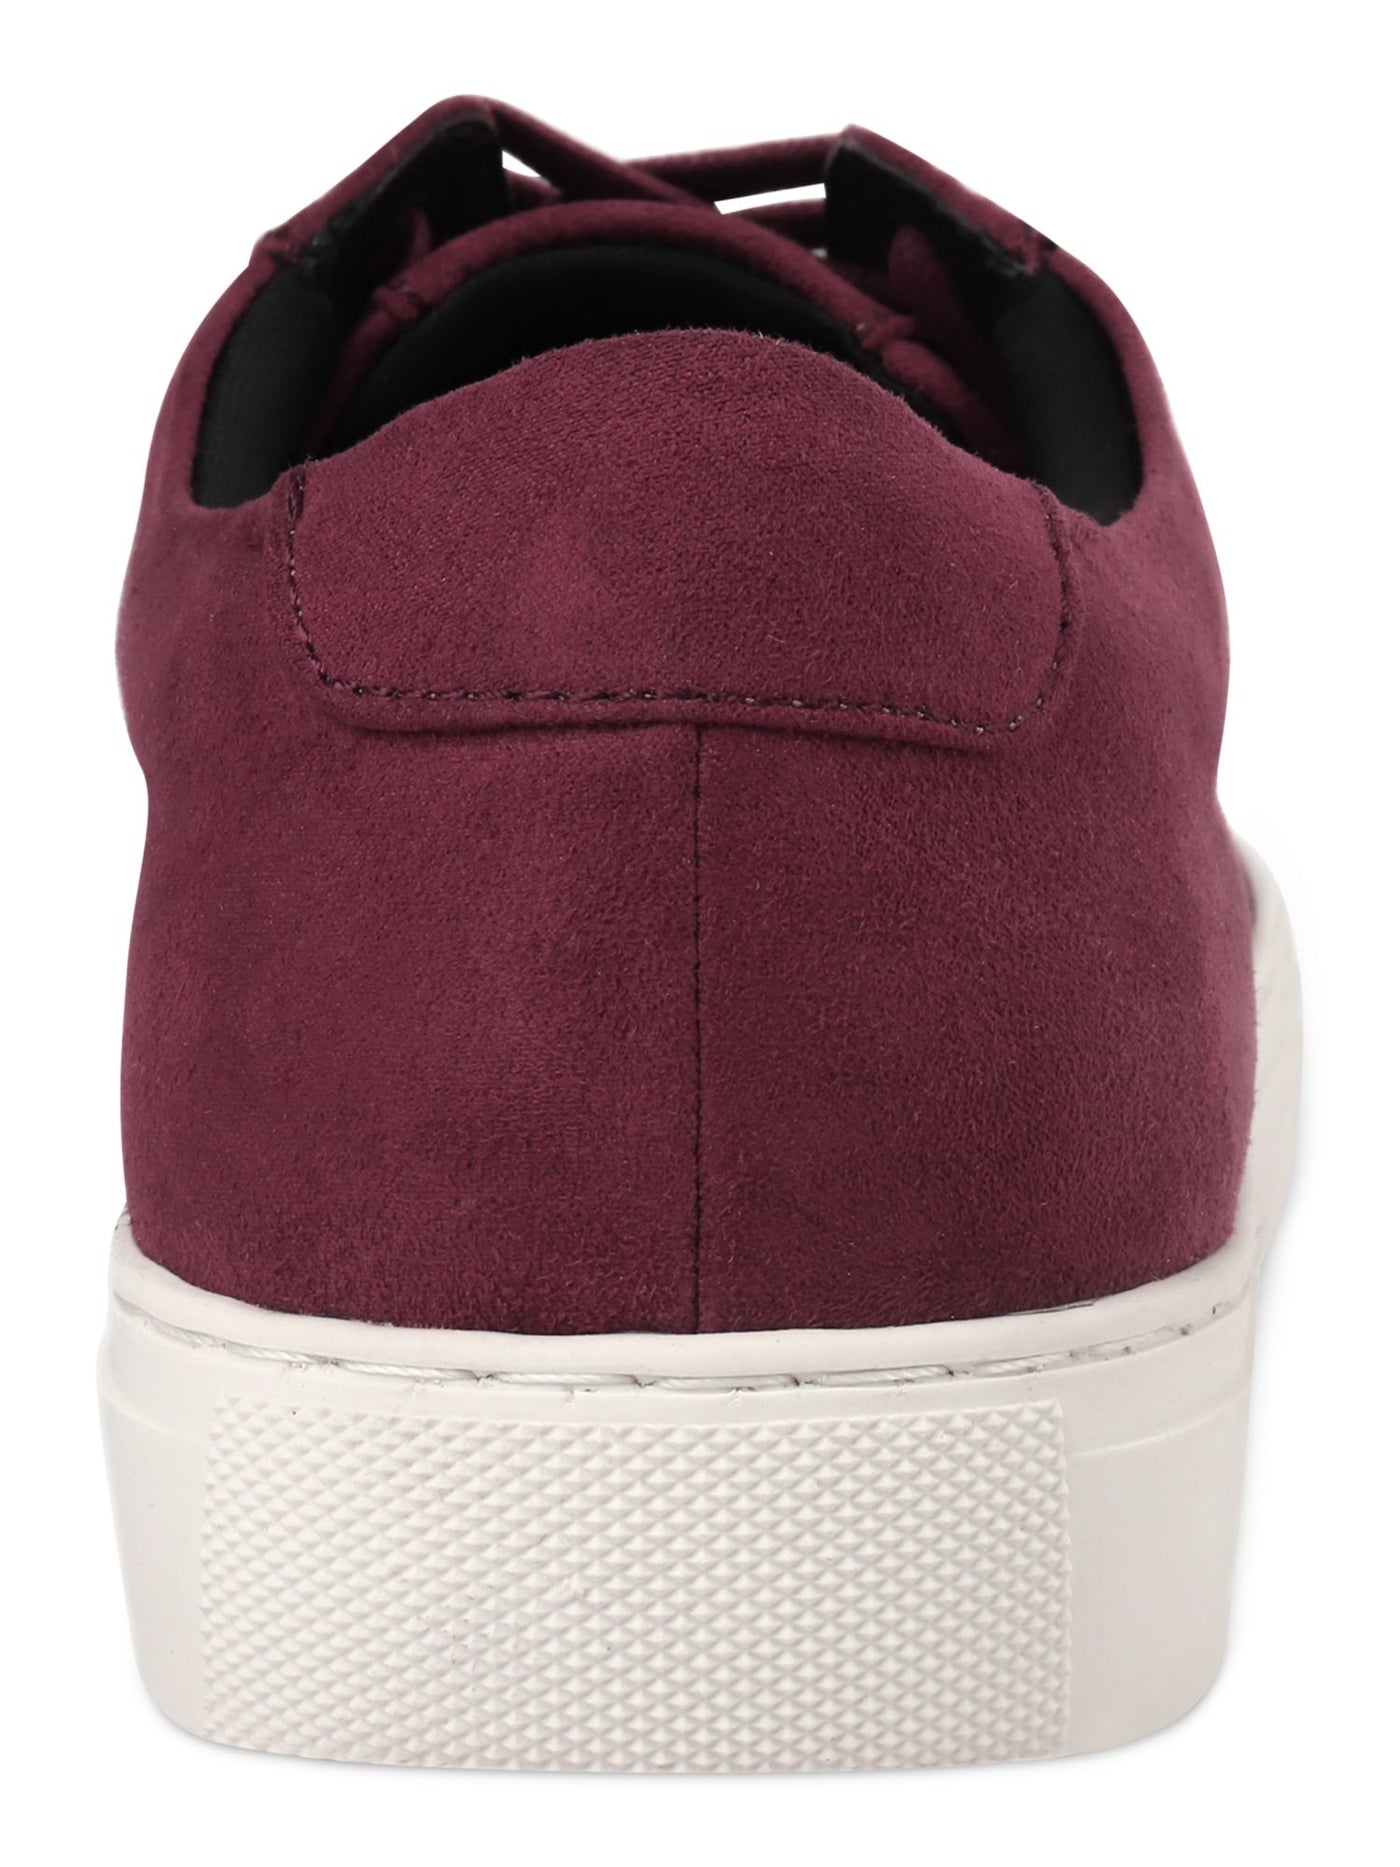 ALFANI Mens Burgundy Comfort Grayson Round Toe Platform Lace-Up Athletic Sneakers Shoes 7 M